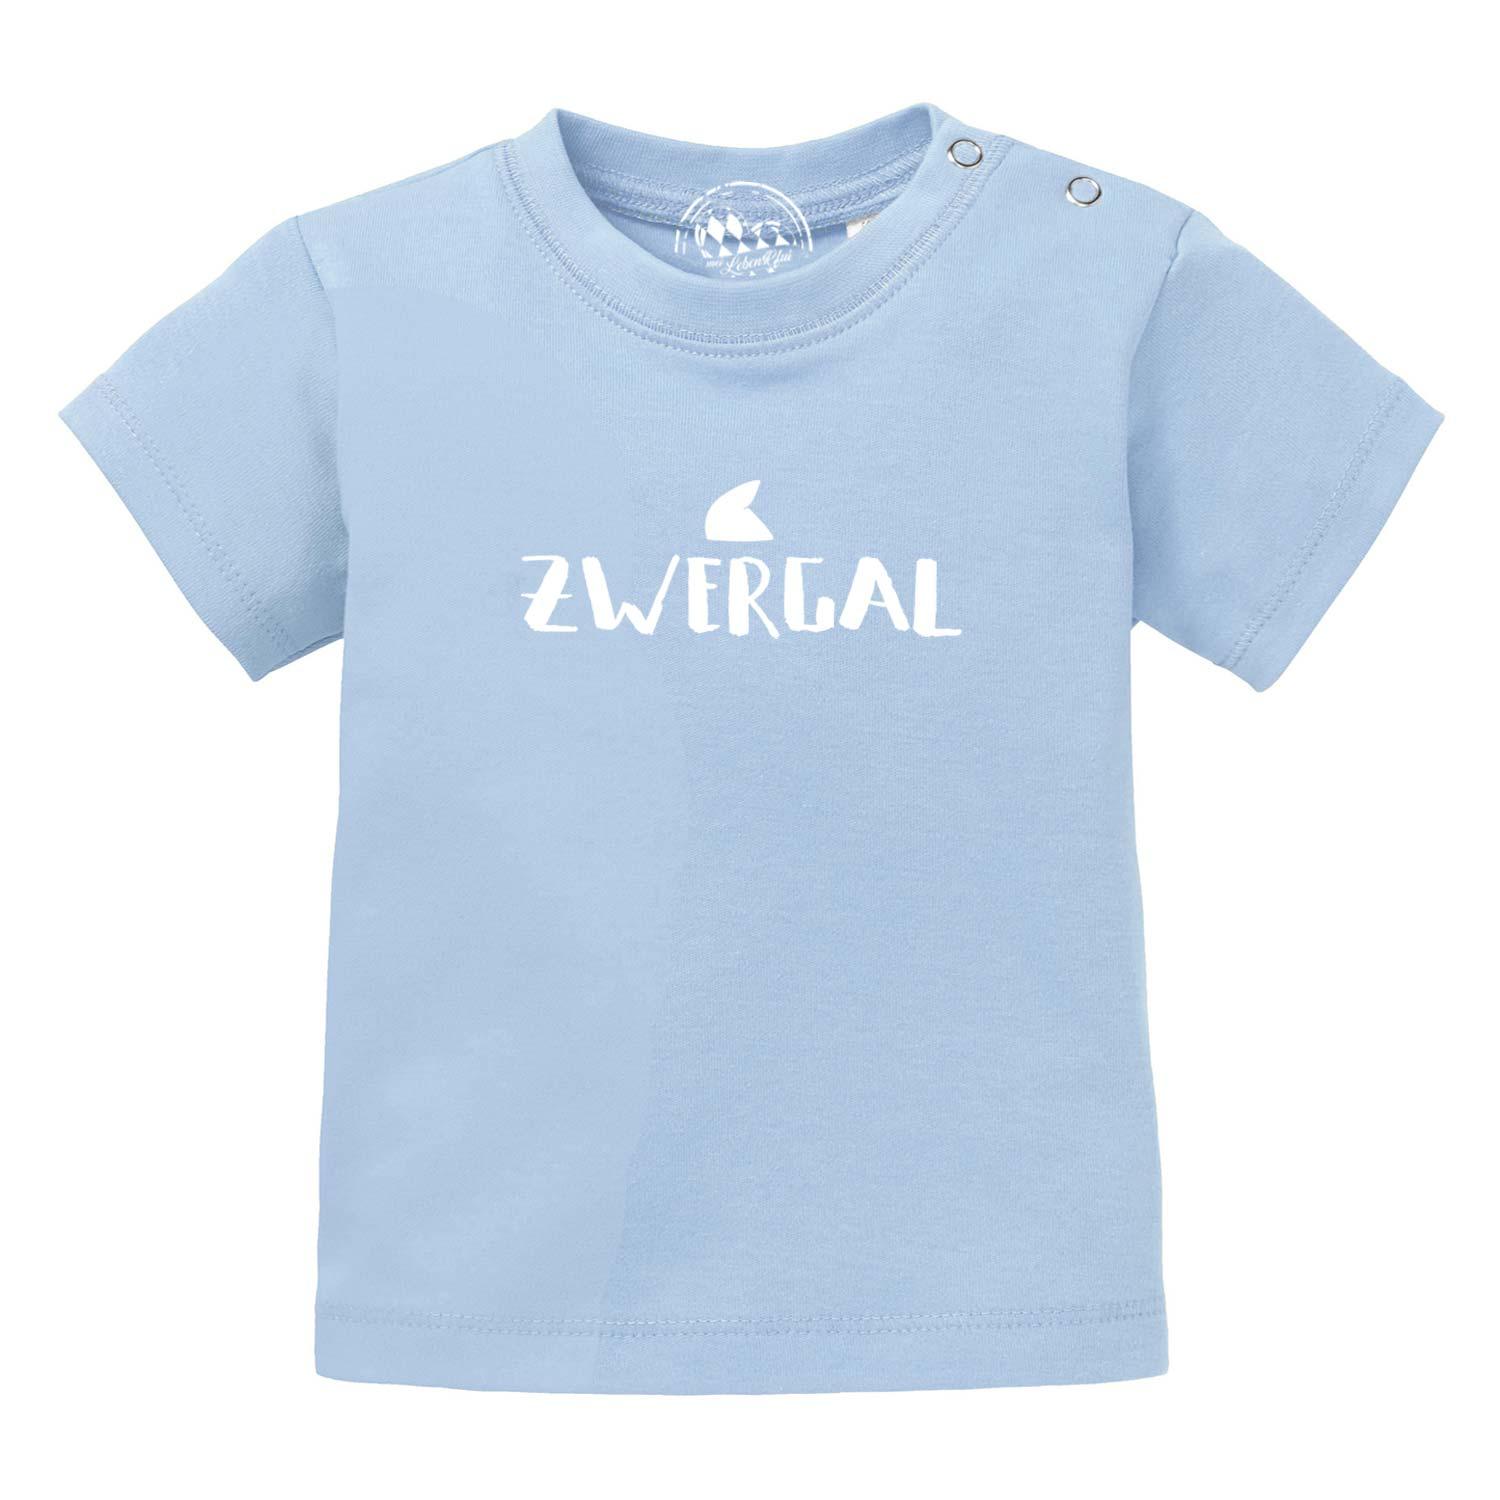 Baby T-Shirt "Zwergal" - bavariashop - mei LebensGfui